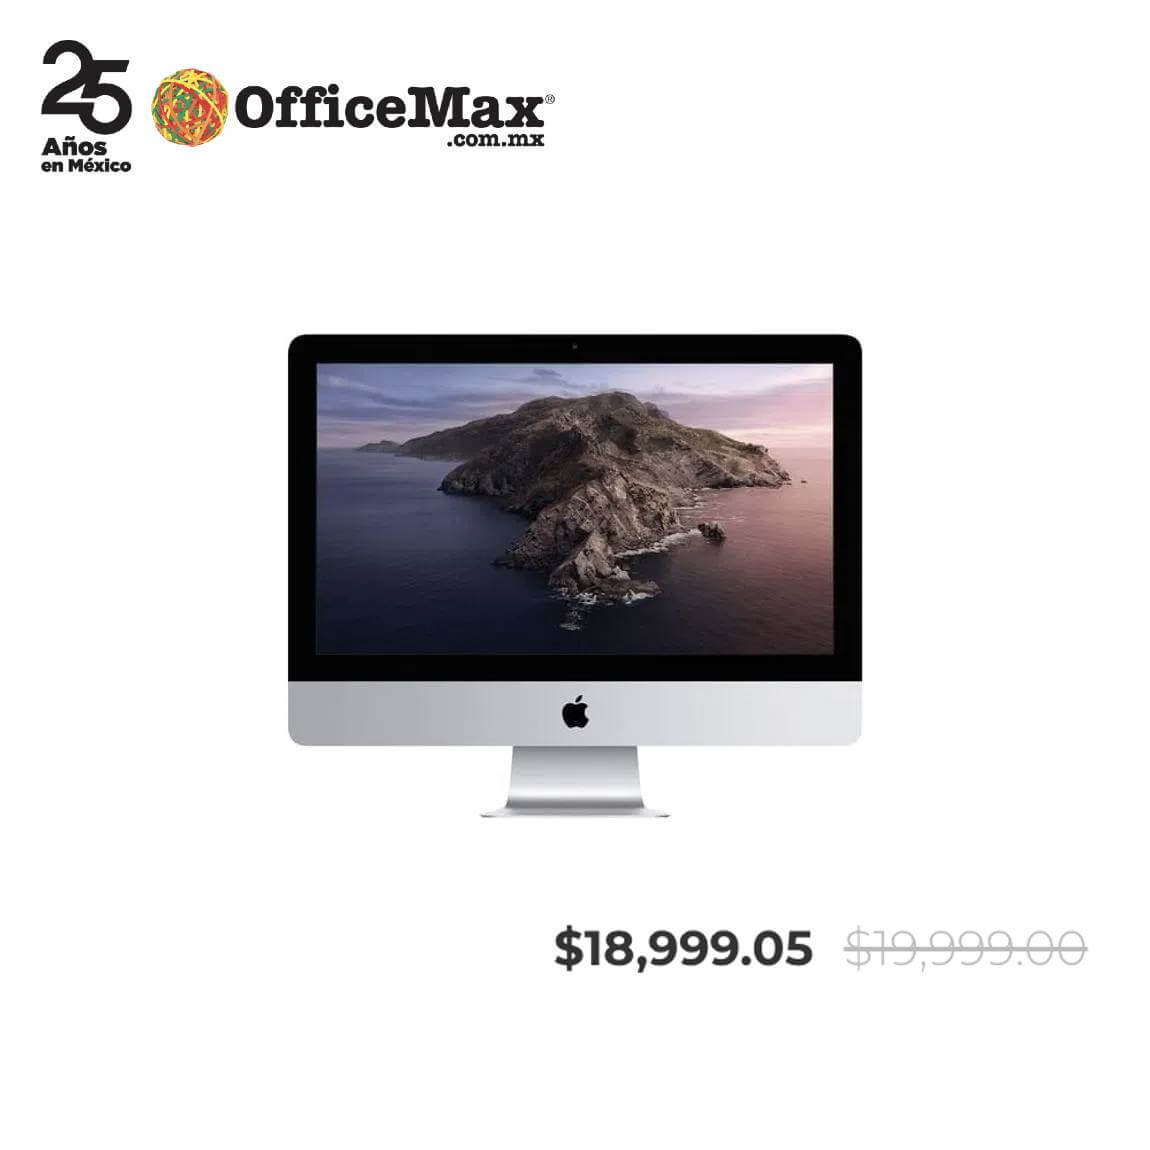 Bono de $1,000 en iMac por promoción OfficeMax